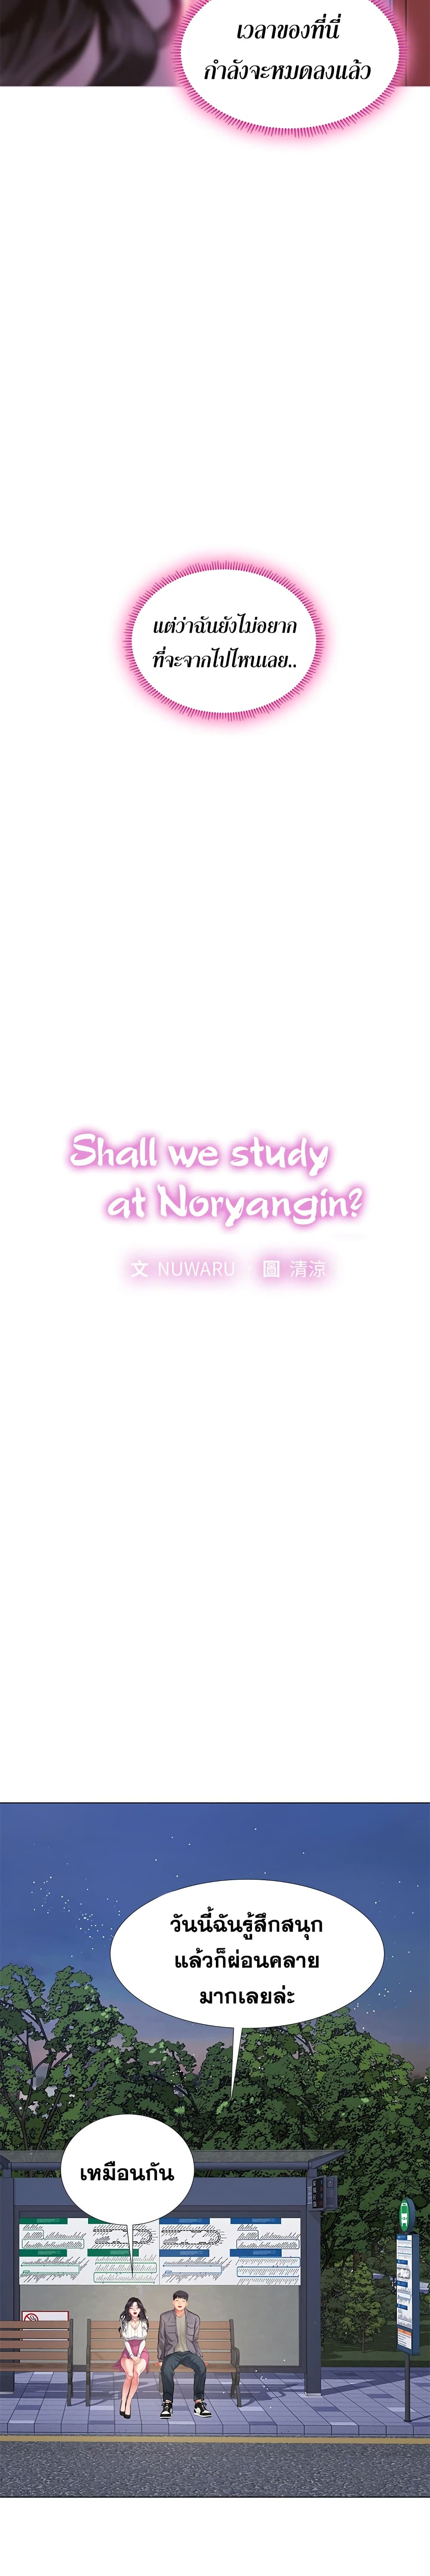 Should I Study at Noryangjin? 73-73